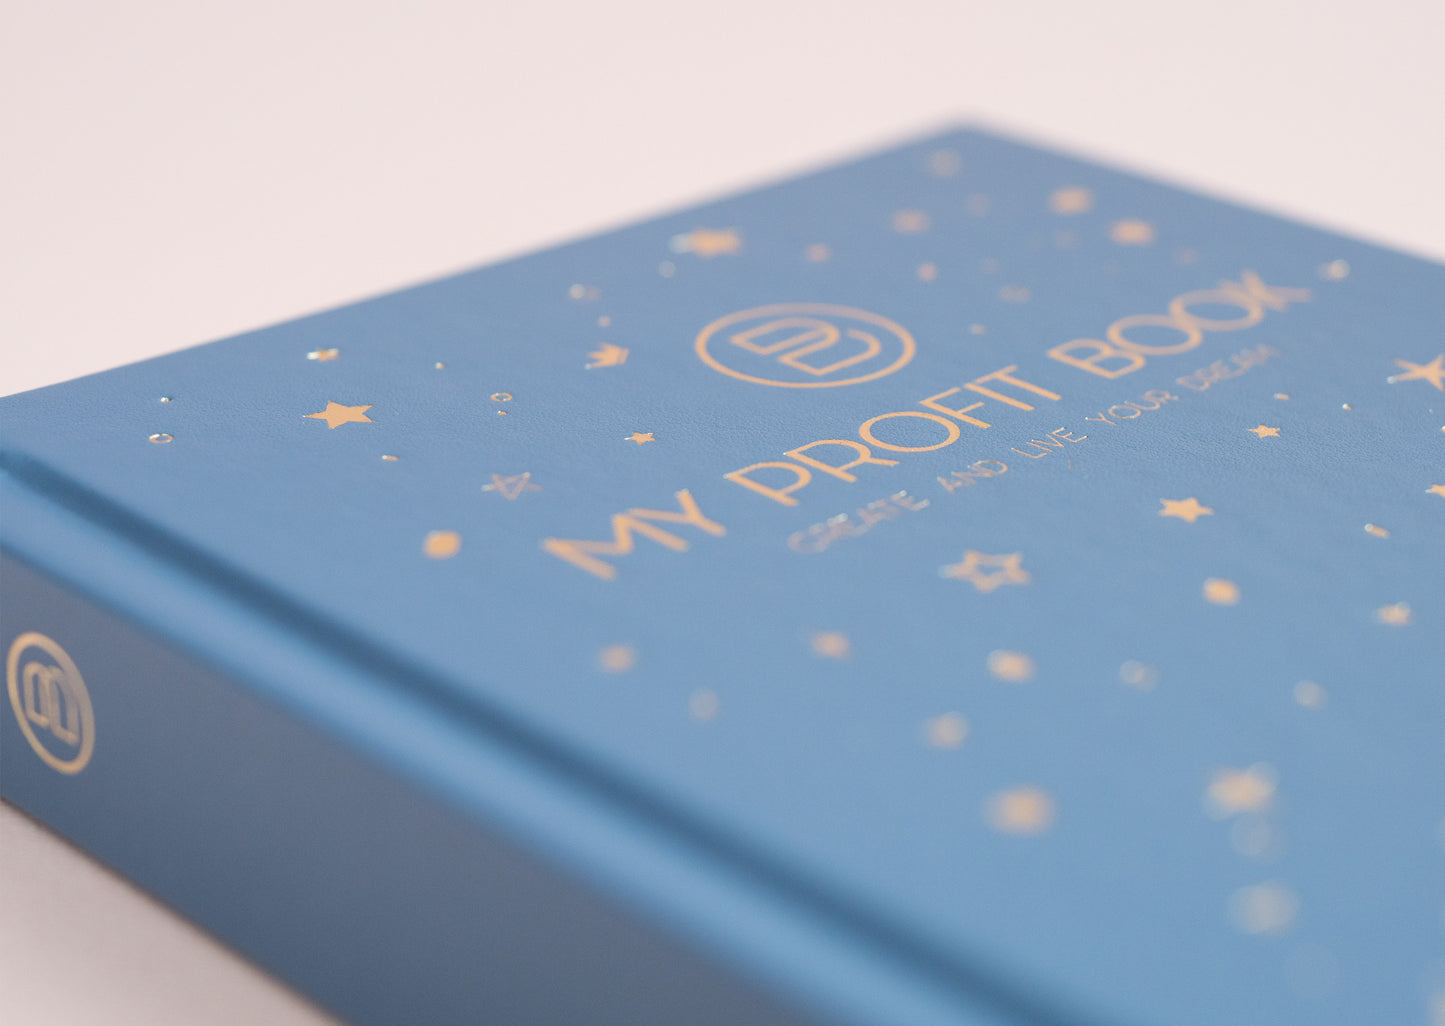 MyProfitBook - Starry Sky Planner